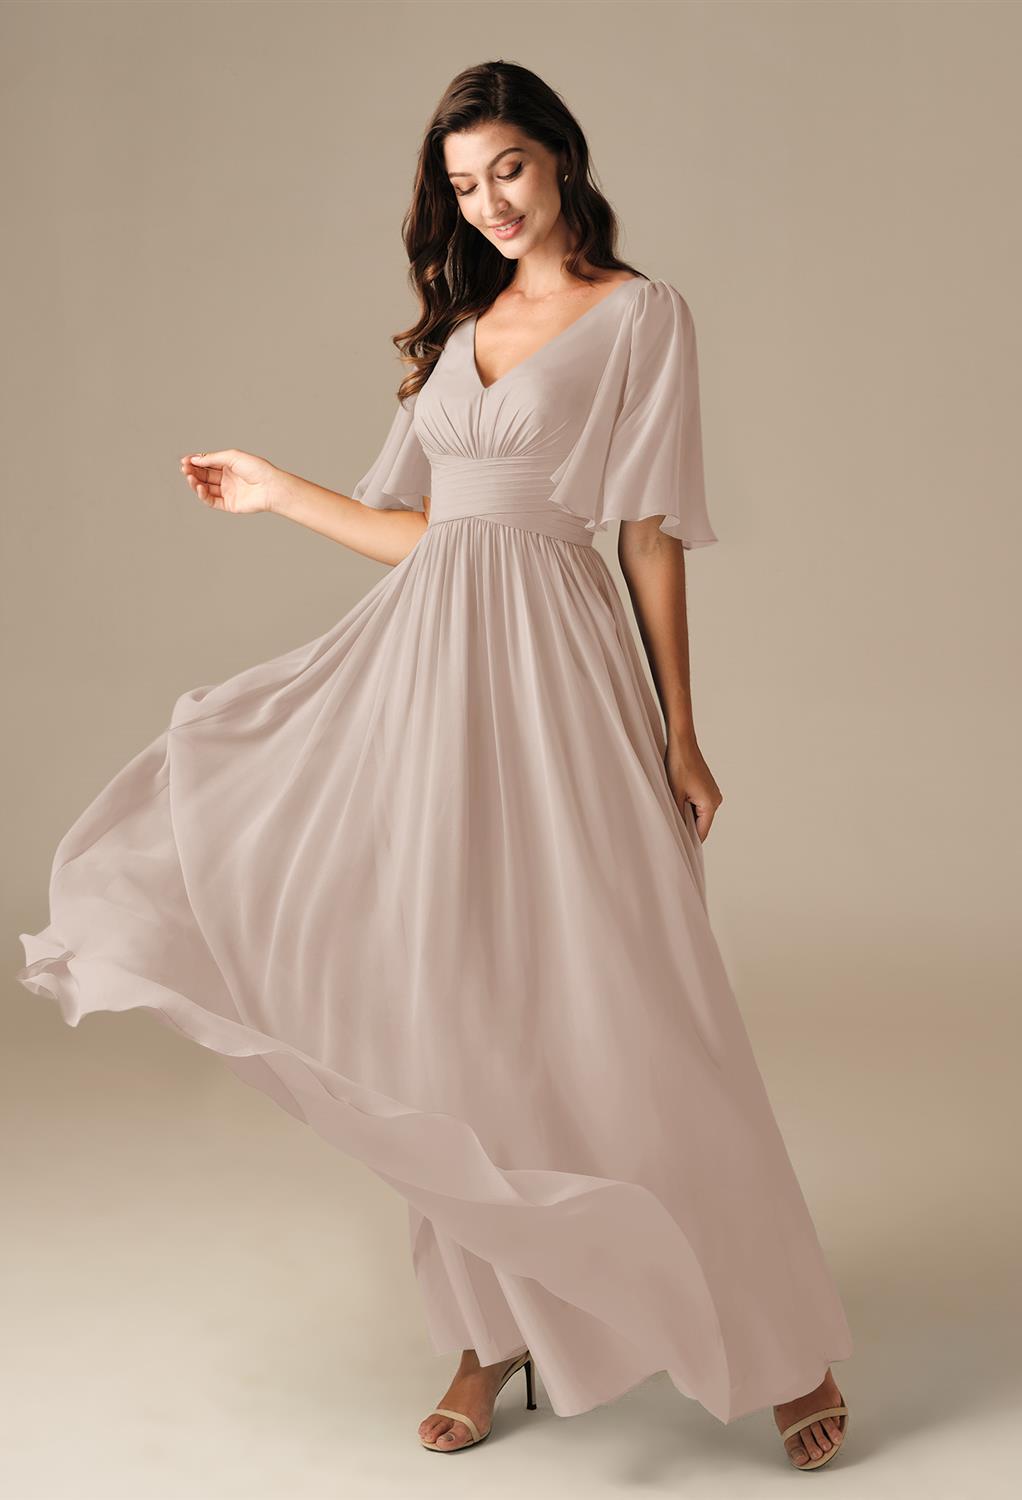 Ruffled A-line bridesmaid dress